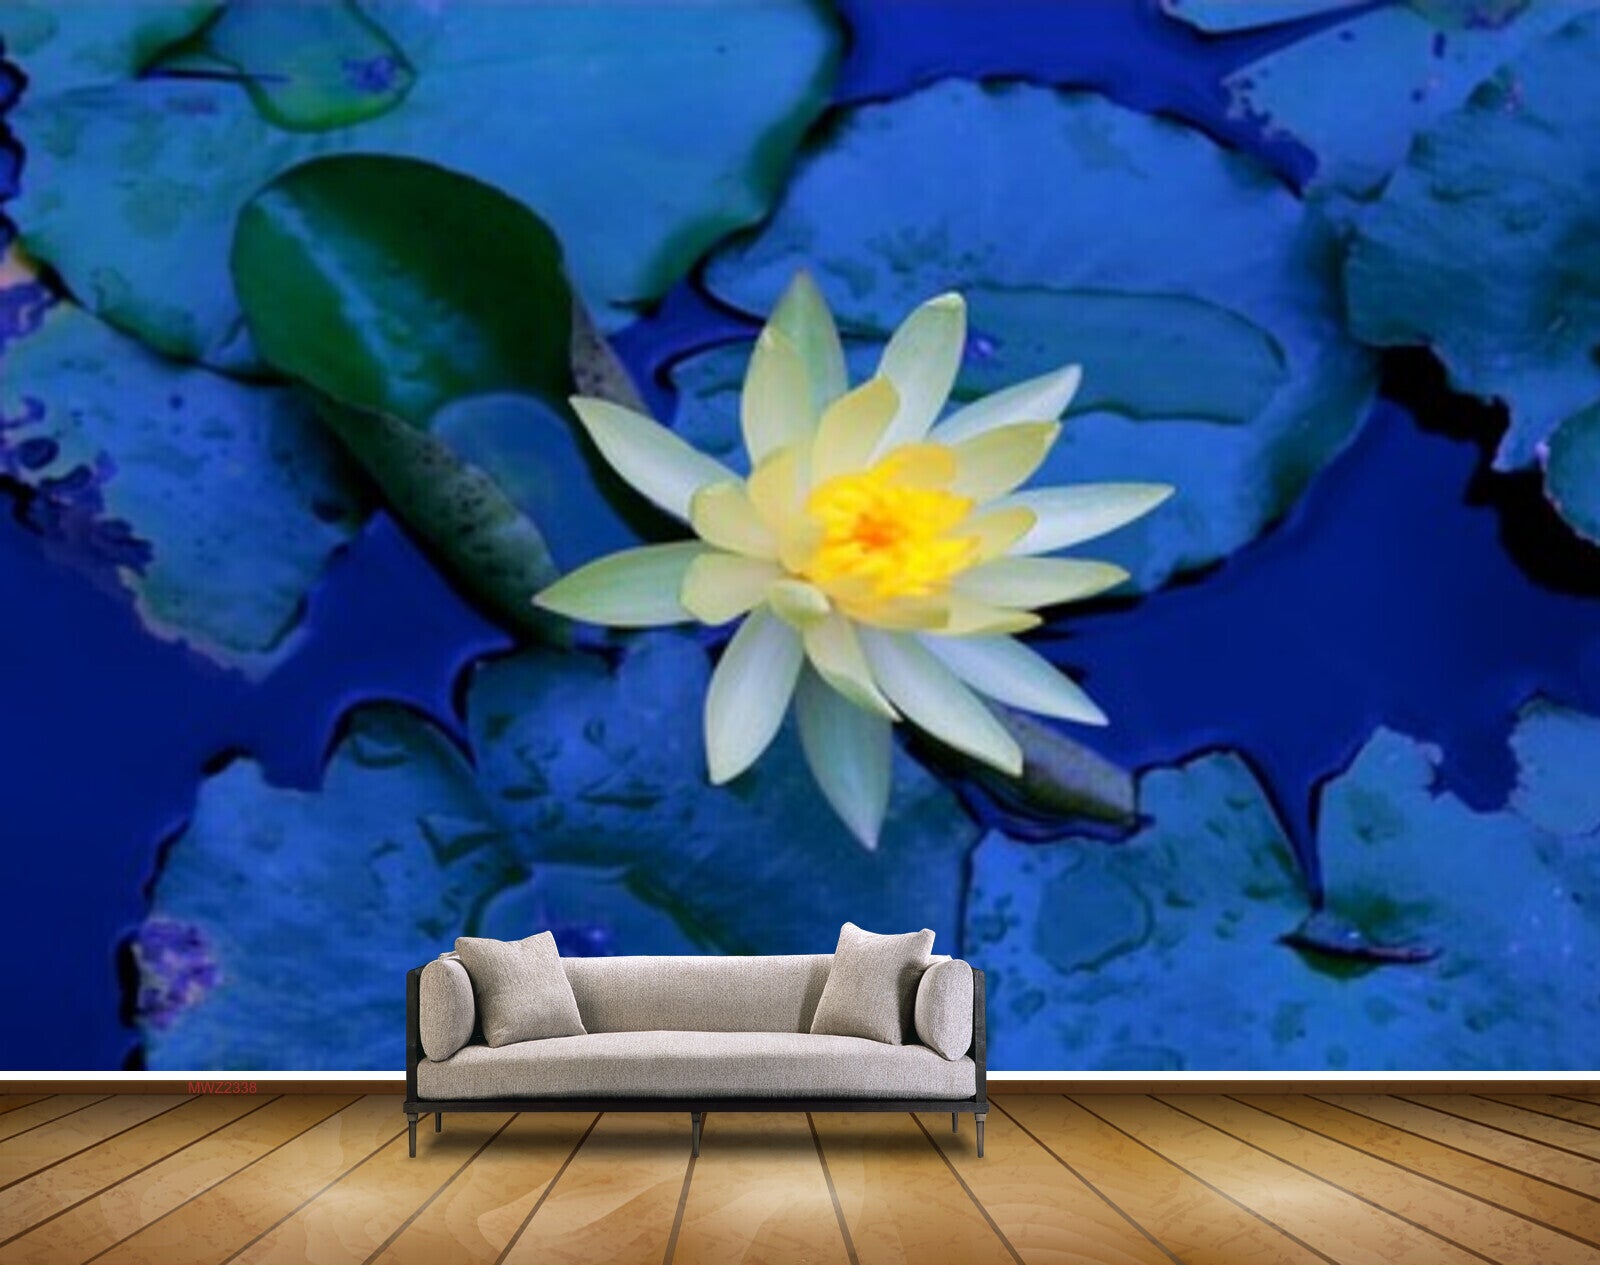 20000 Lotus Wallpaper Pictures